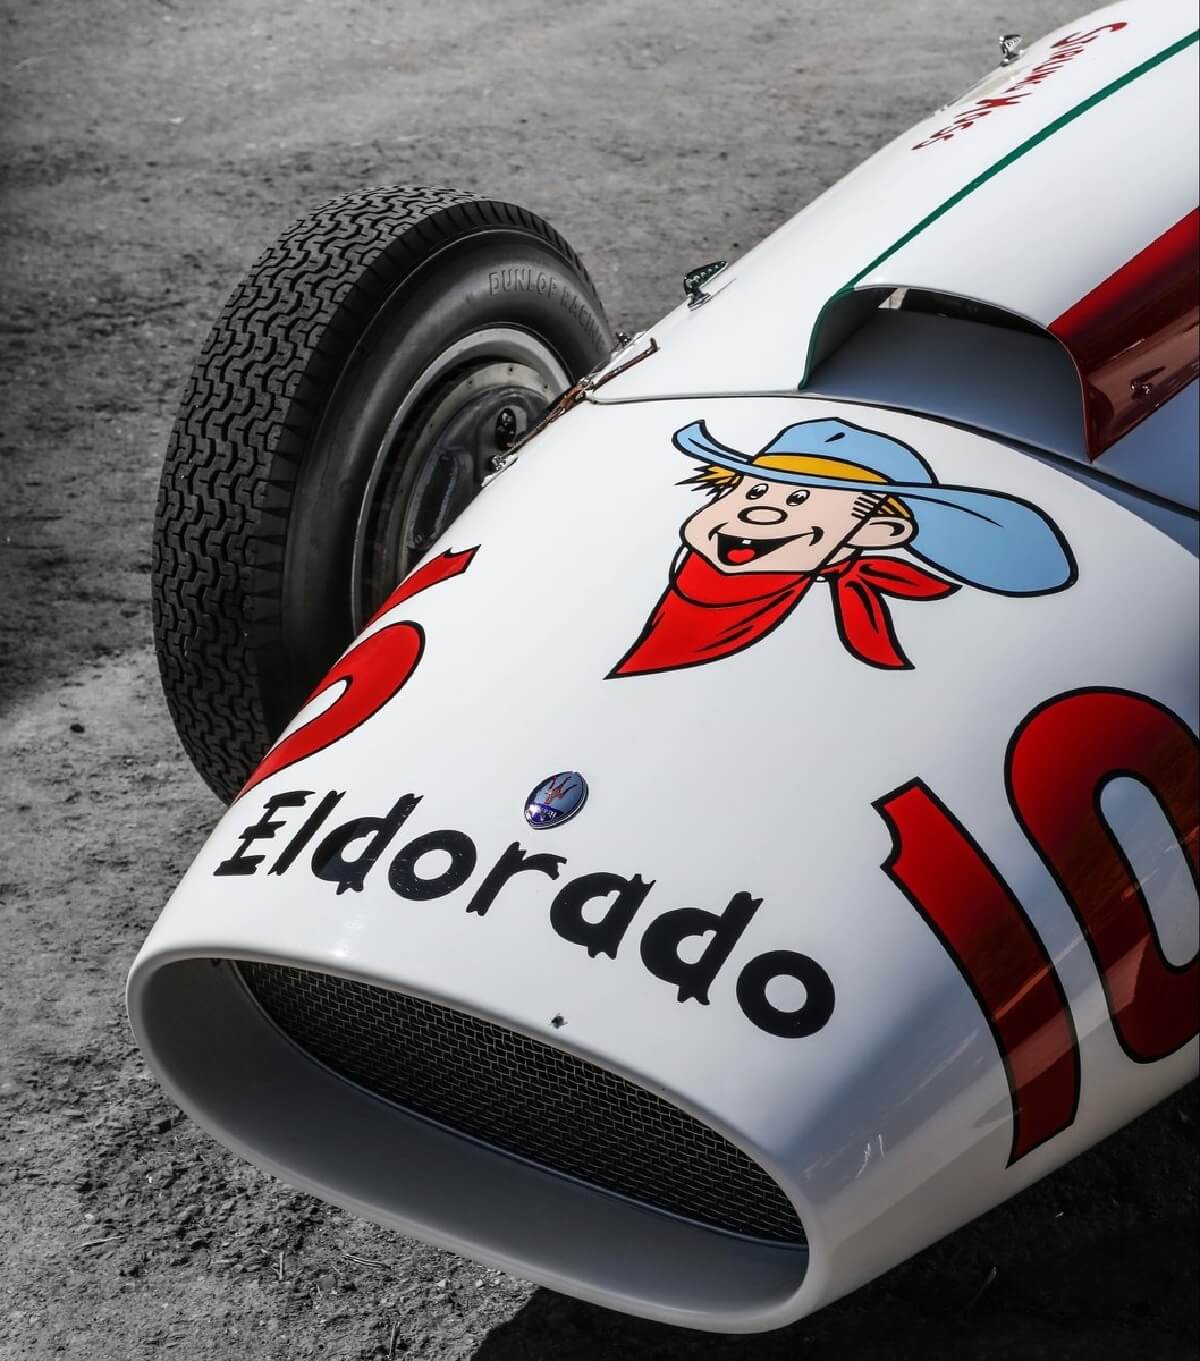 Maserati-Eldorado_Racecar-1958 (5).jpg